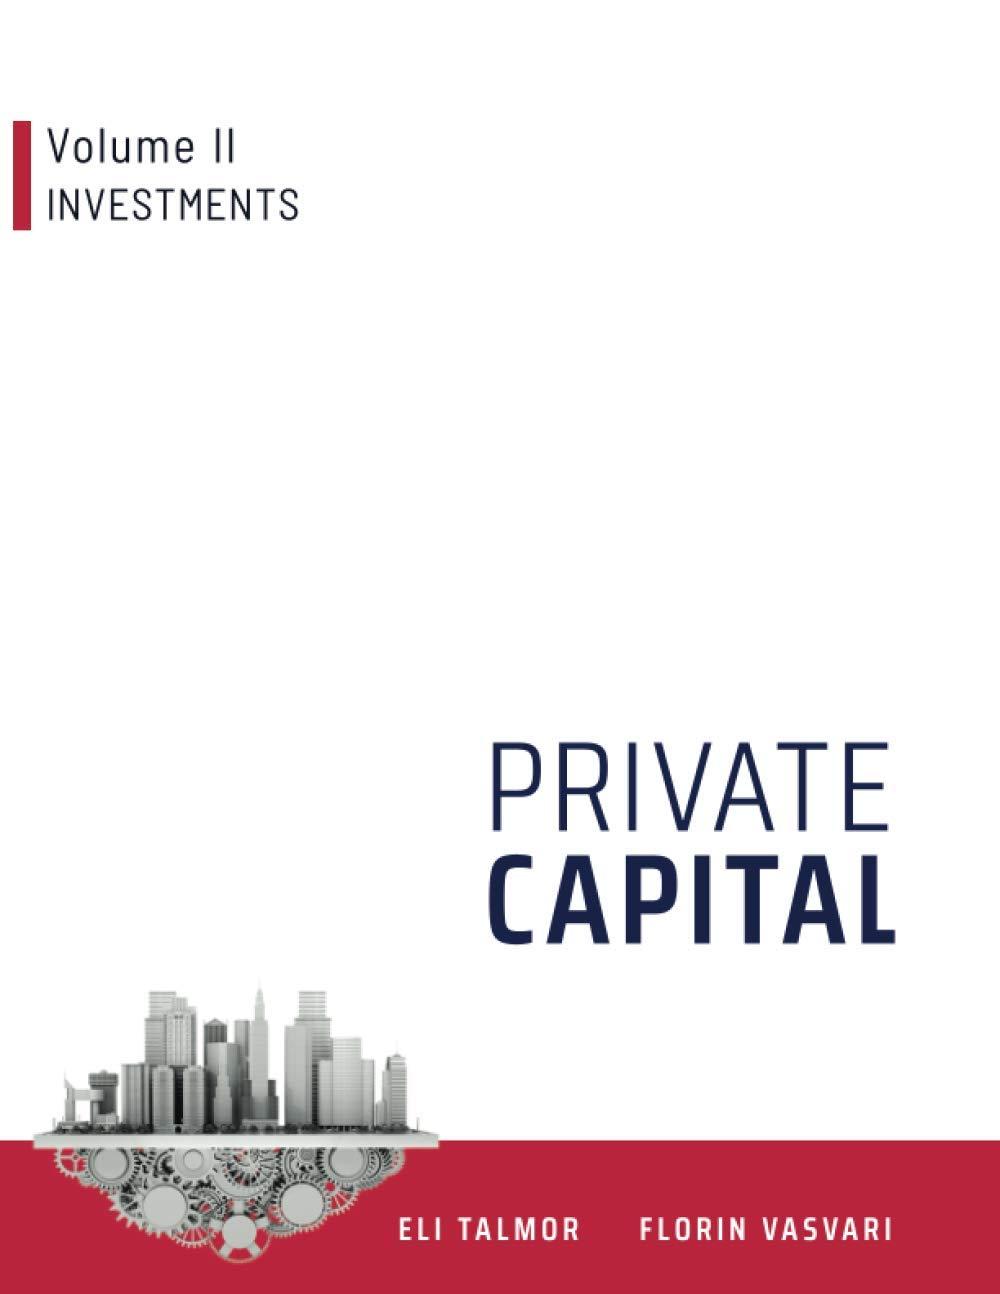 private capital volume ii investments 1st edition eli talmor, florin vasvari 978-1916211056